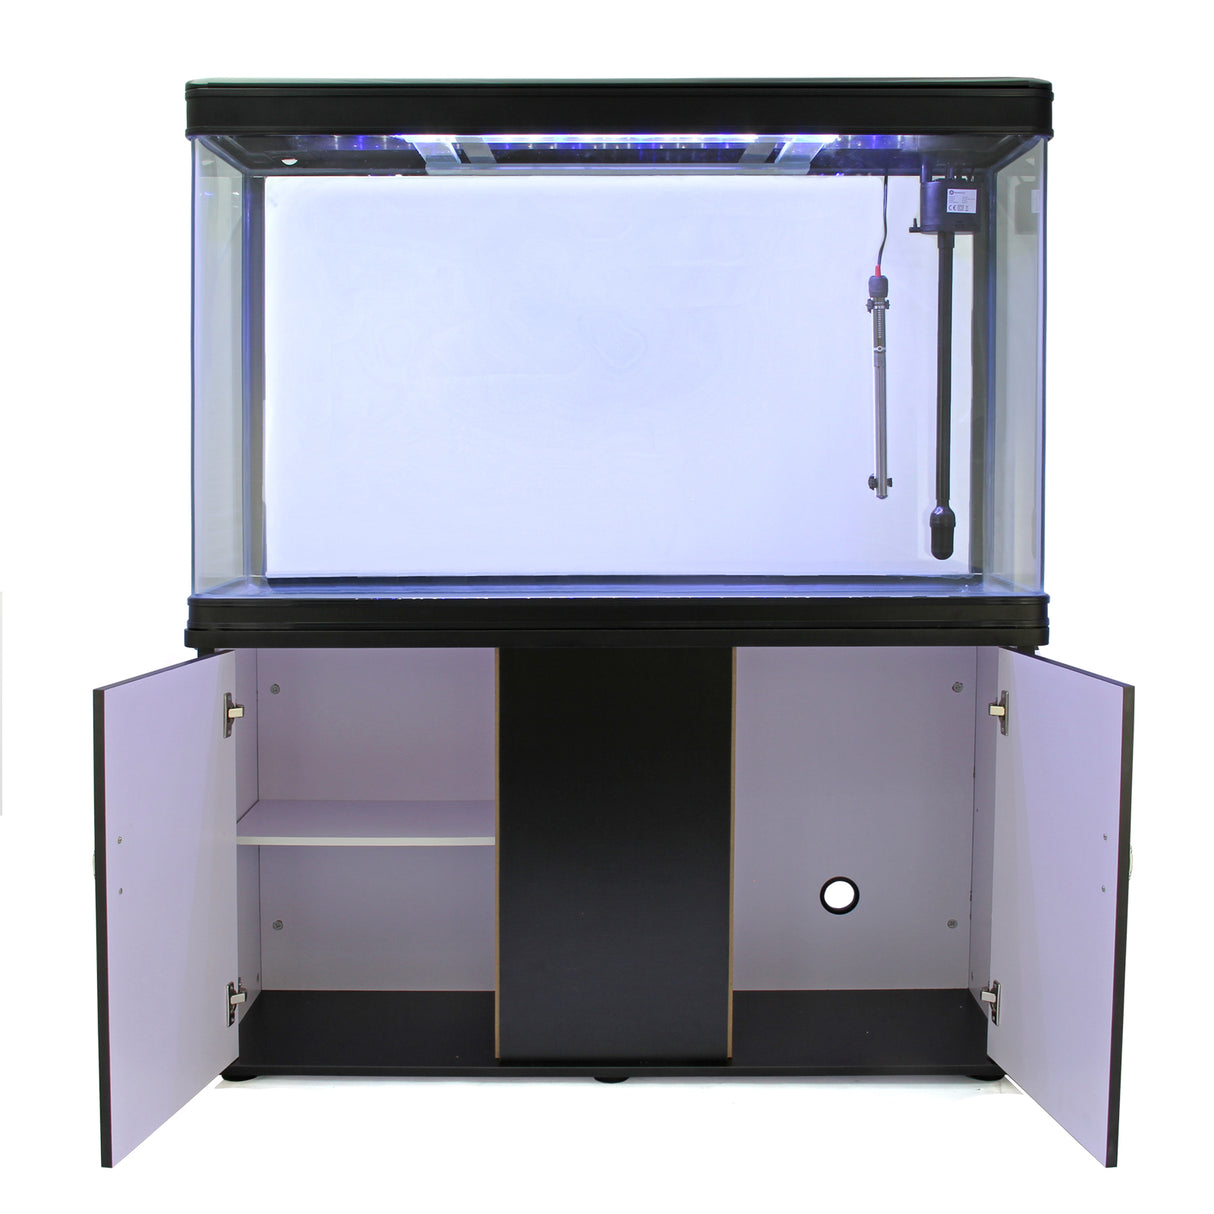 Aquarium Fish Tank & Cabinet with Complete Starter Kit - Black Tank & Blue Gravel